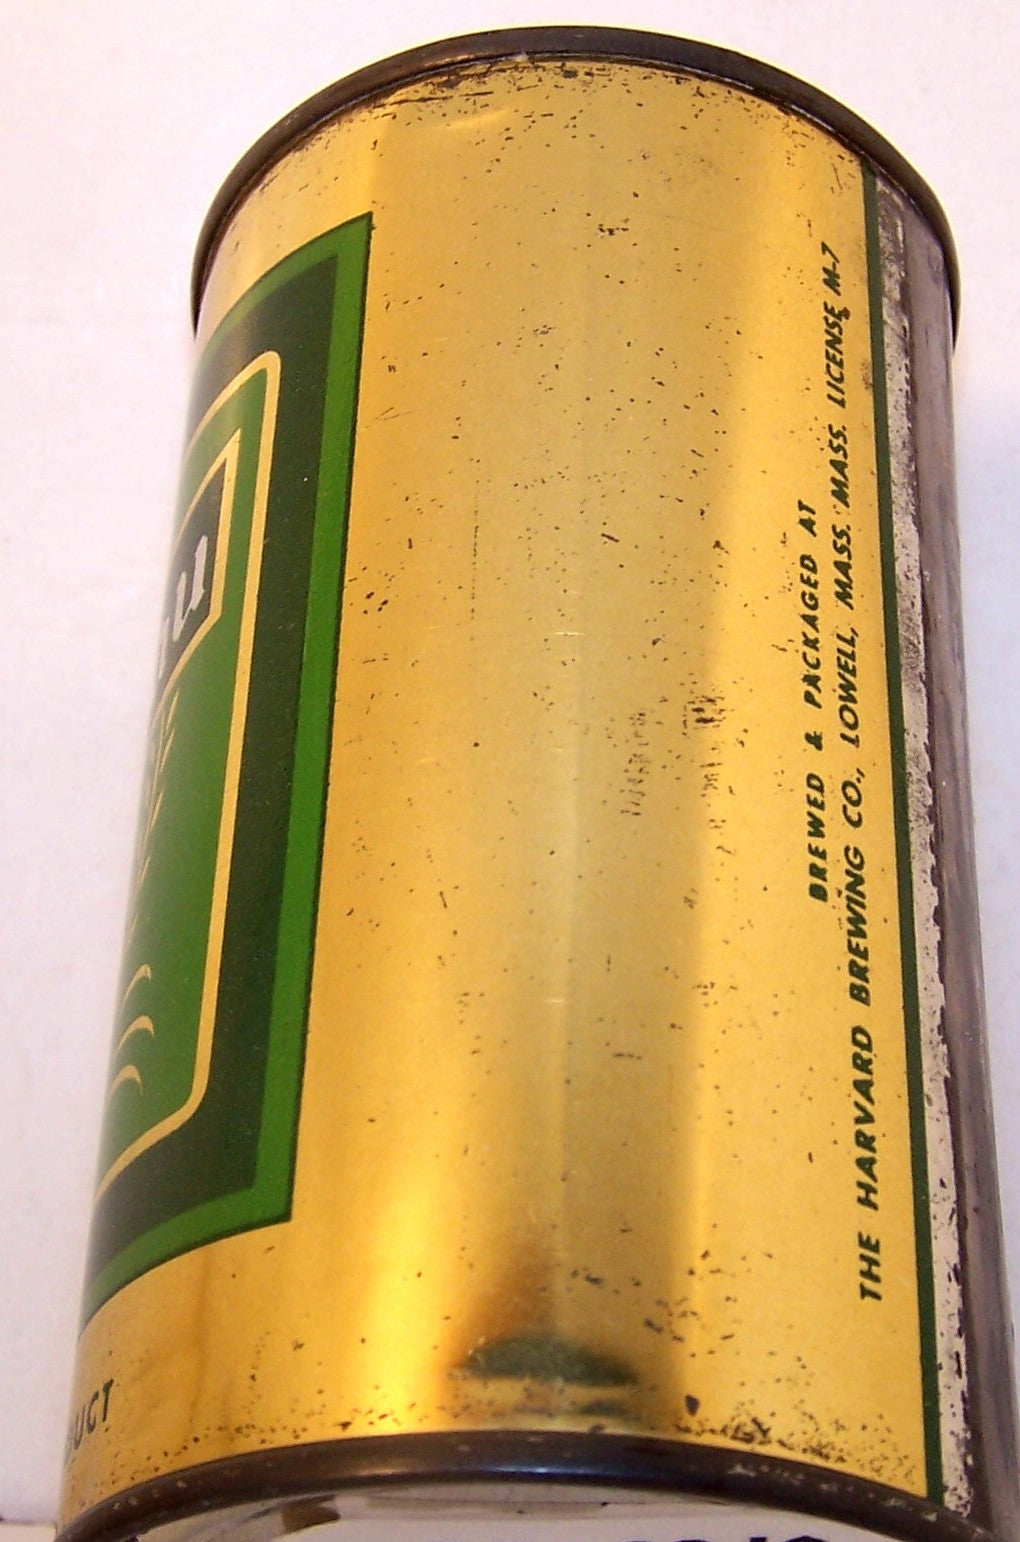 Golden Brau Premium Ale, USBC 72-20, Grade 1. Sold 1/17/15